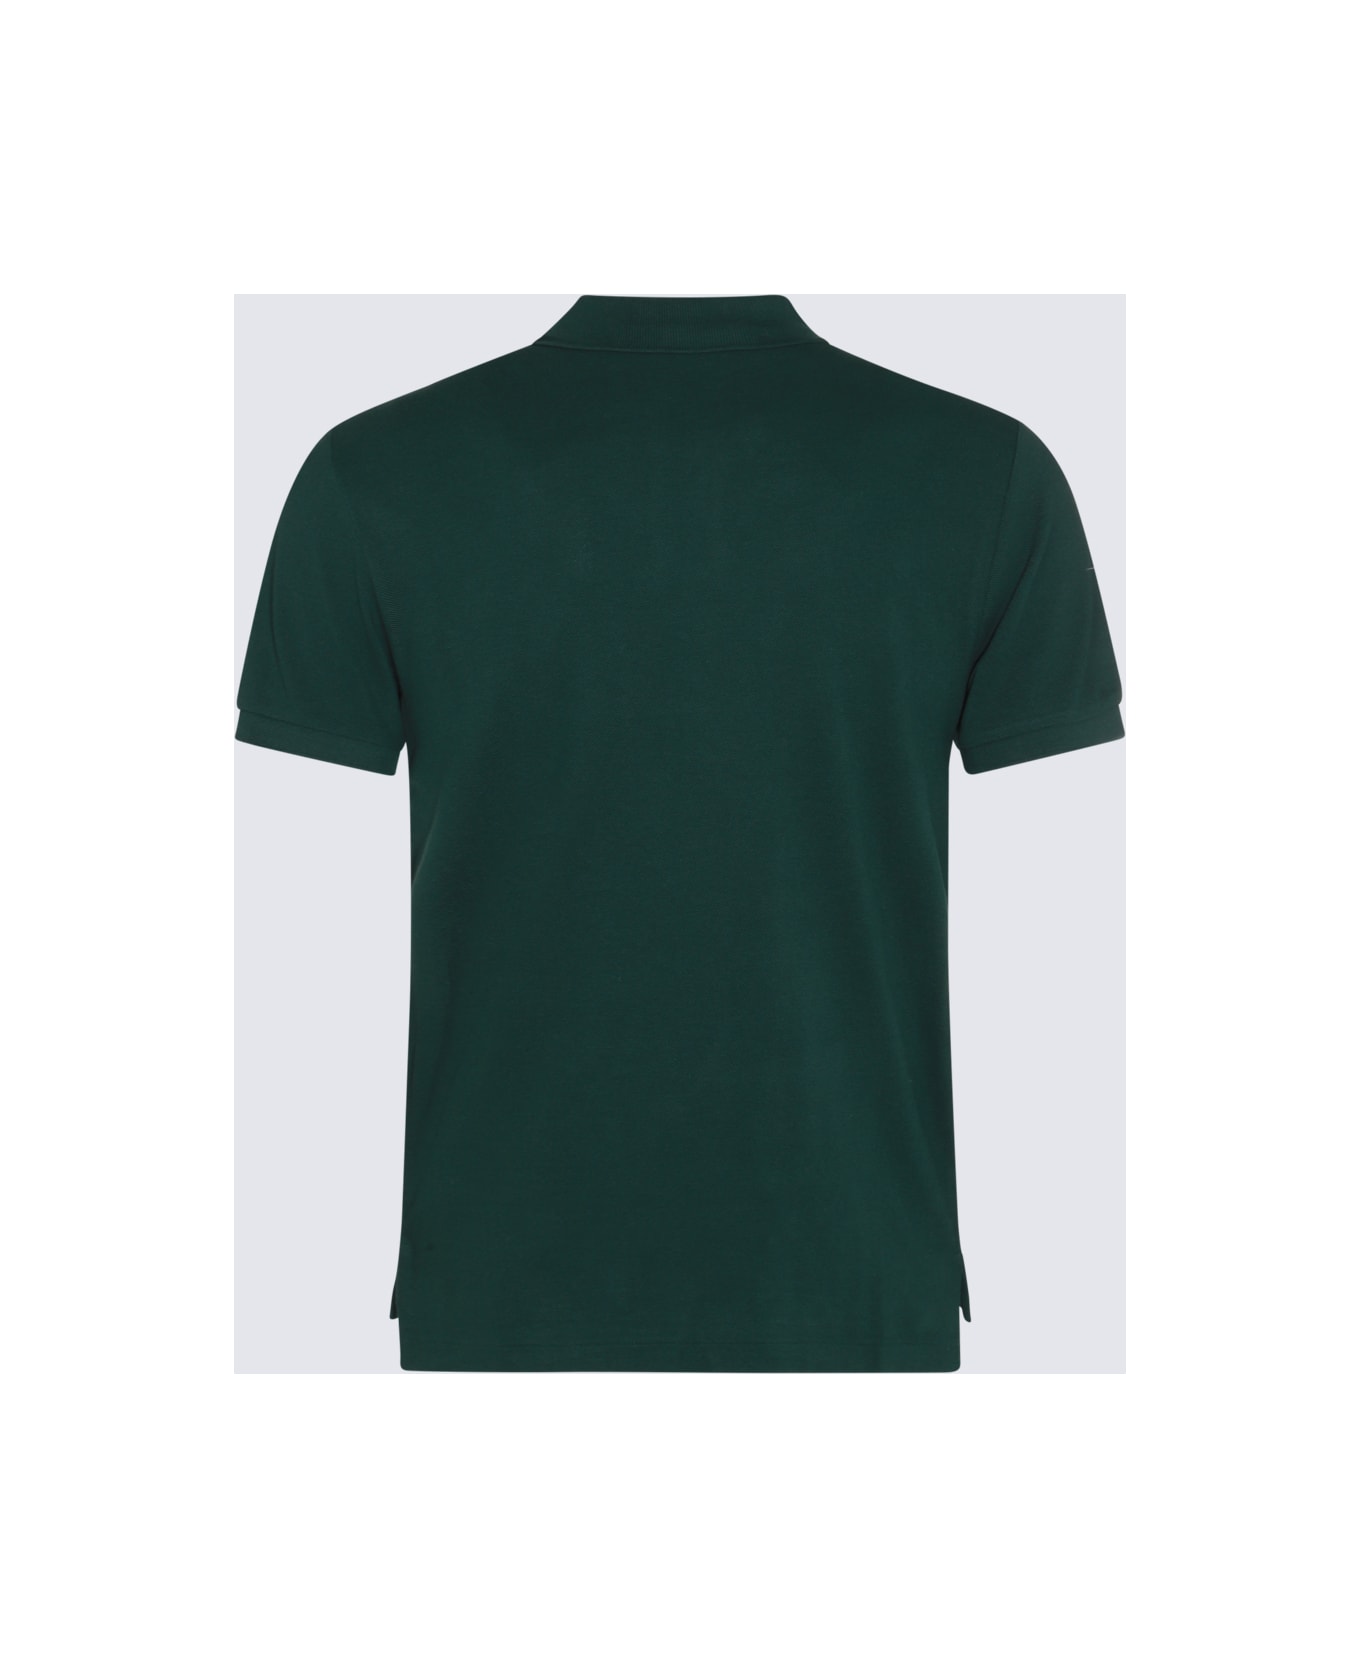 Polo Ralph Lauren Dark Green Cotton Polo Shirt - COLLEGE GREEN